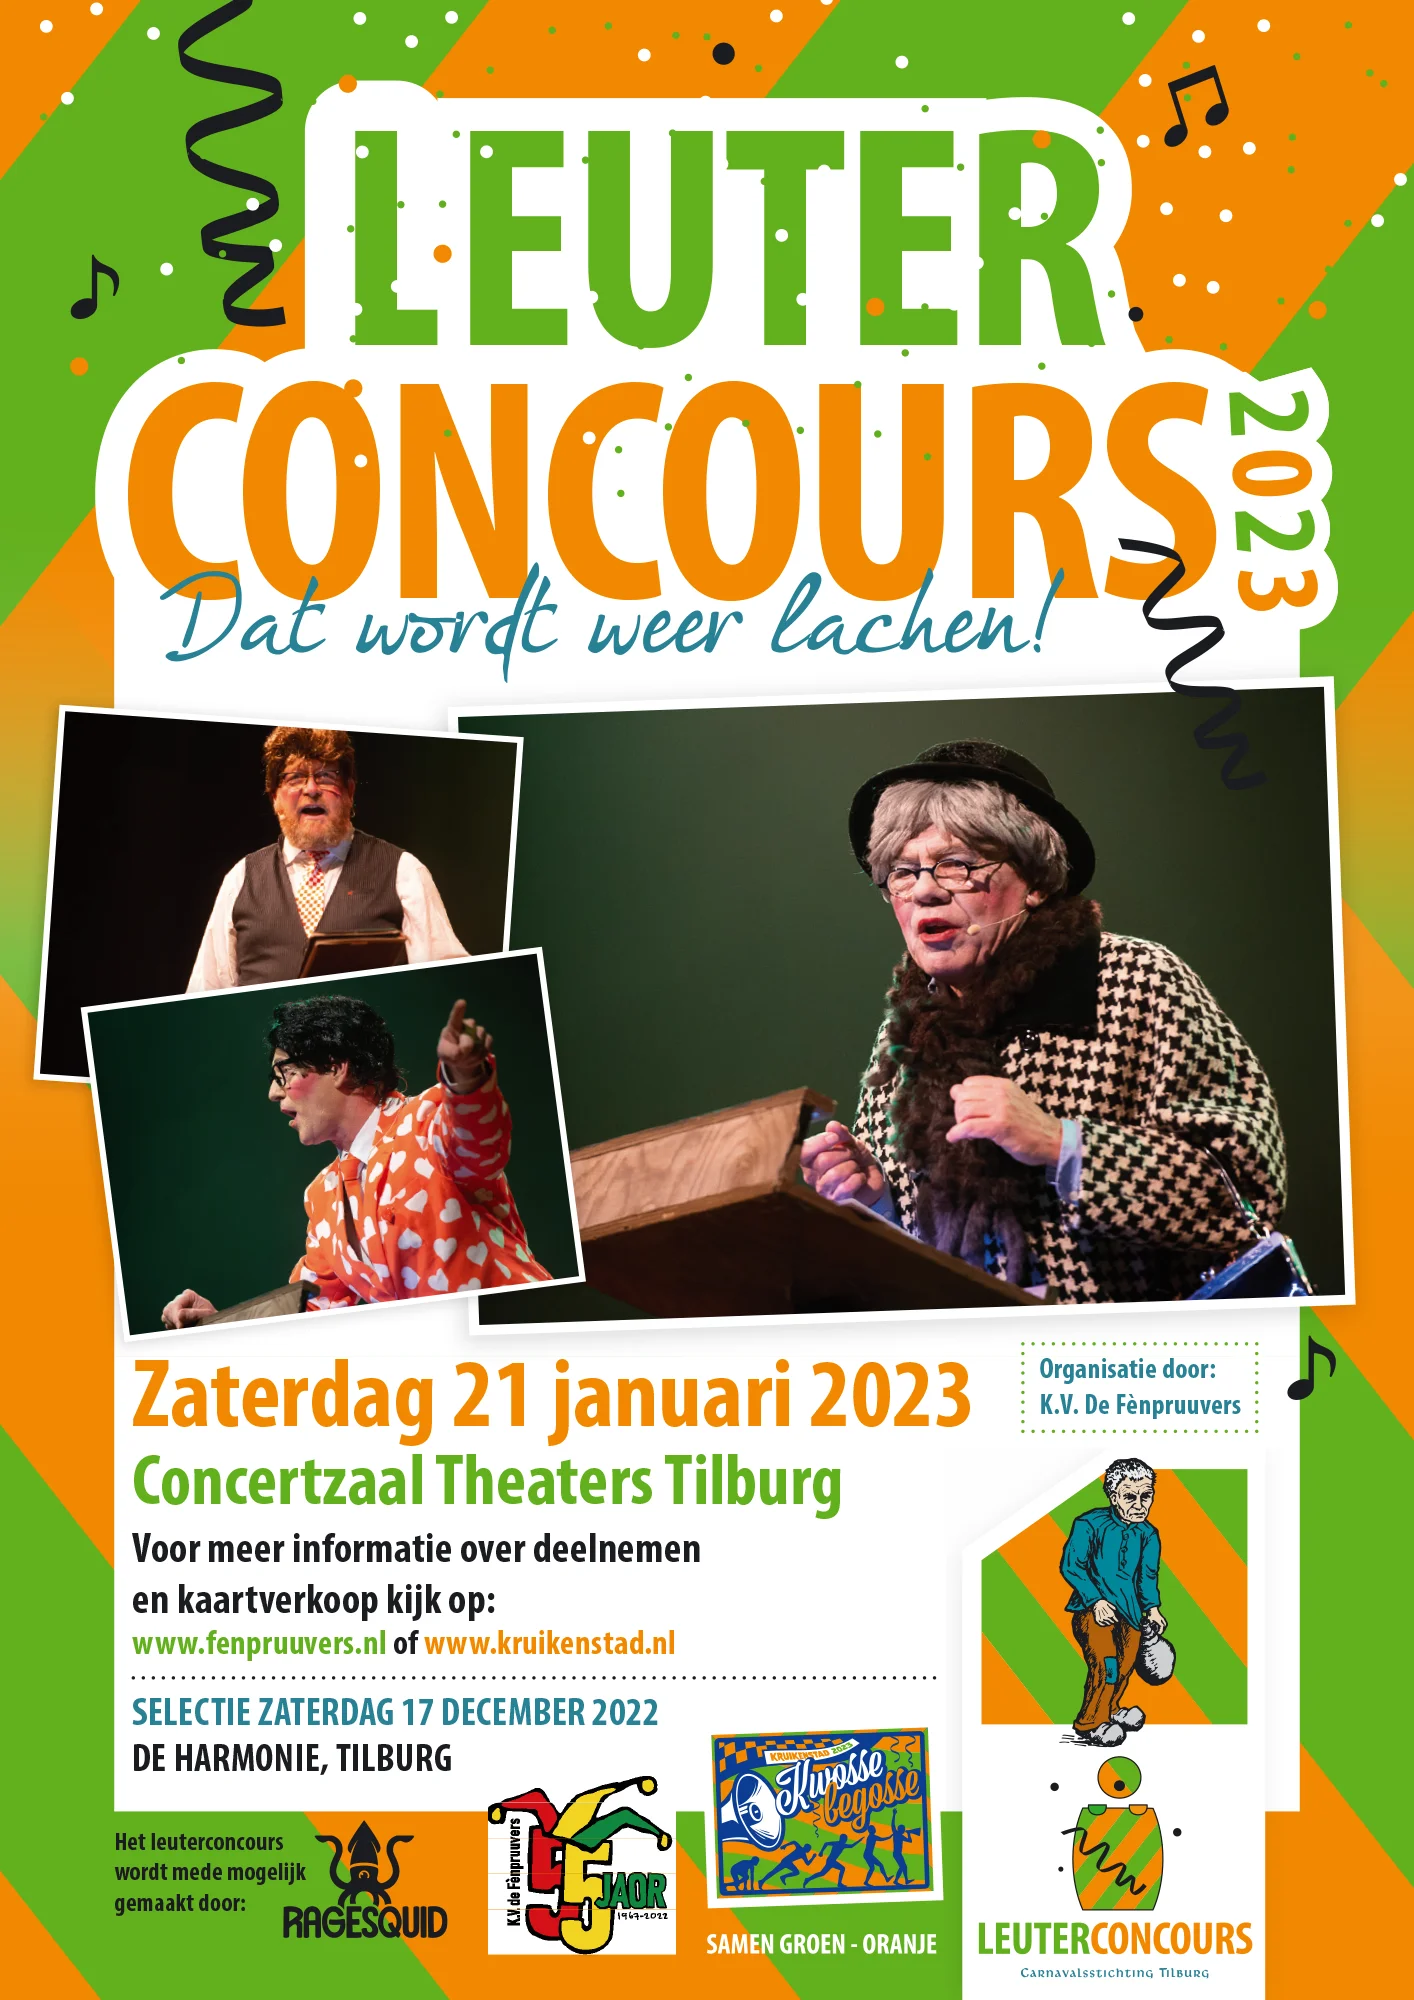 17-12-2022 Selectie Leuterconcours De Harmonie, Tilburg